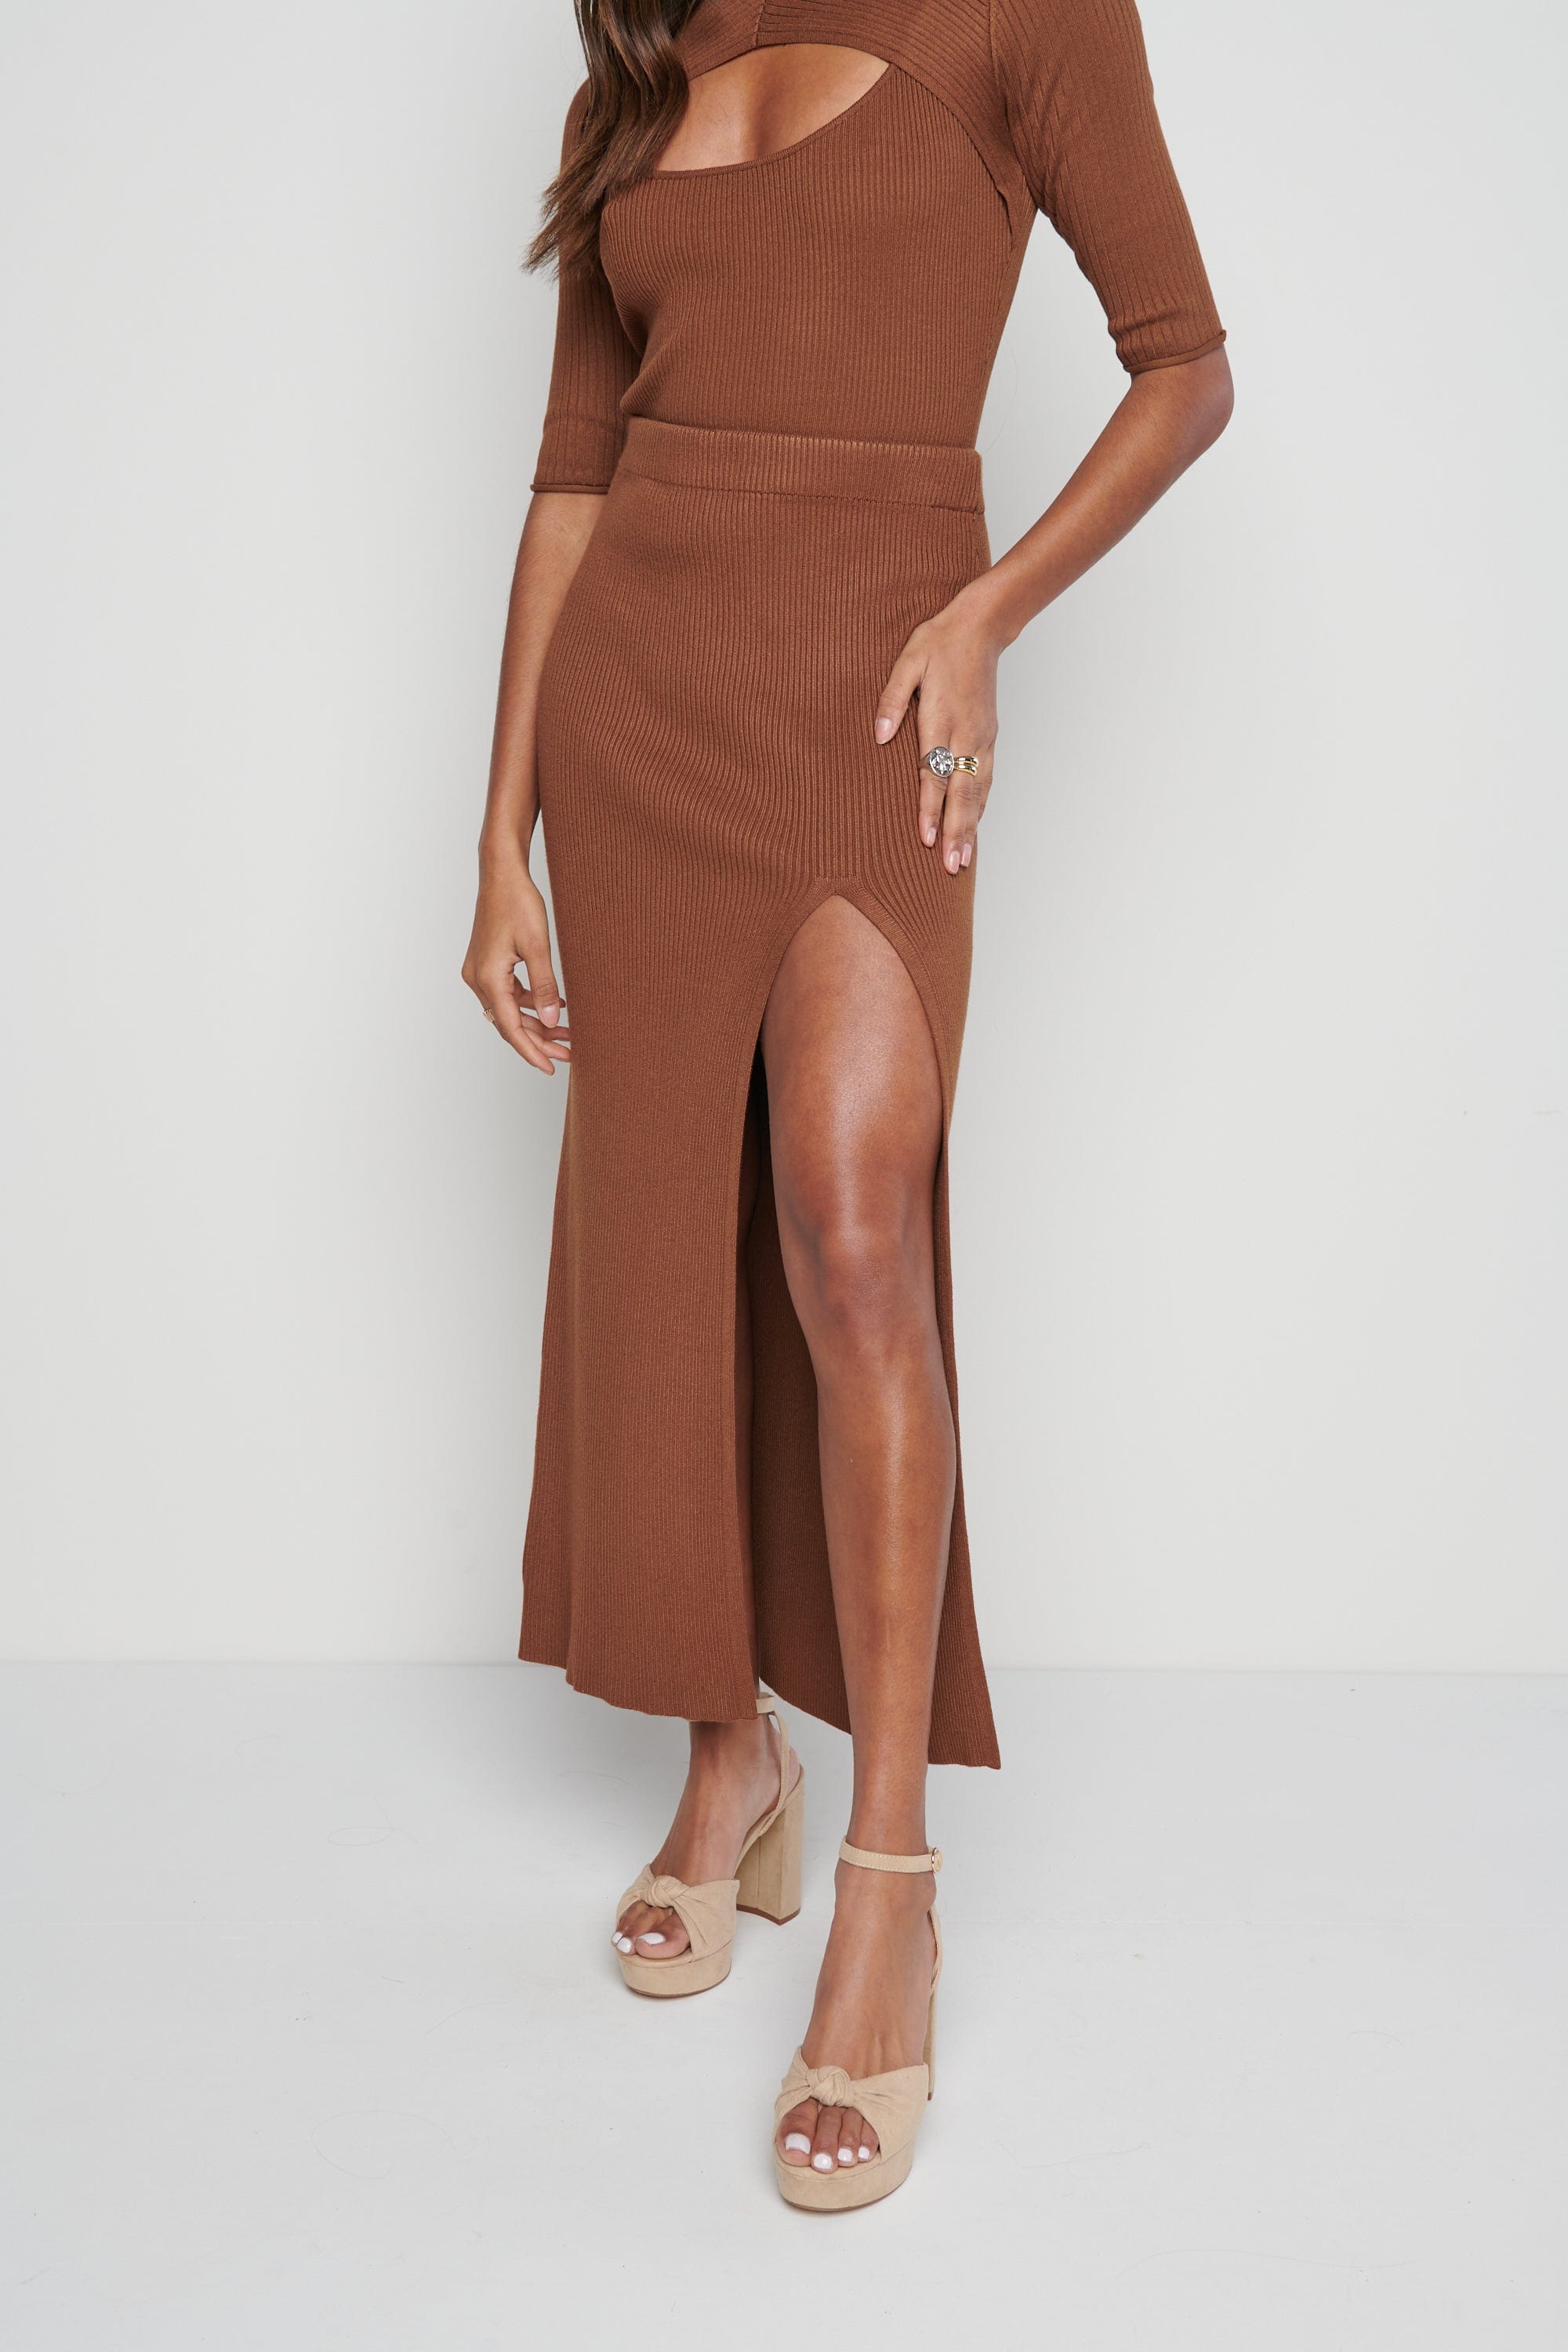 Serena Knit Skirt - Brown, L